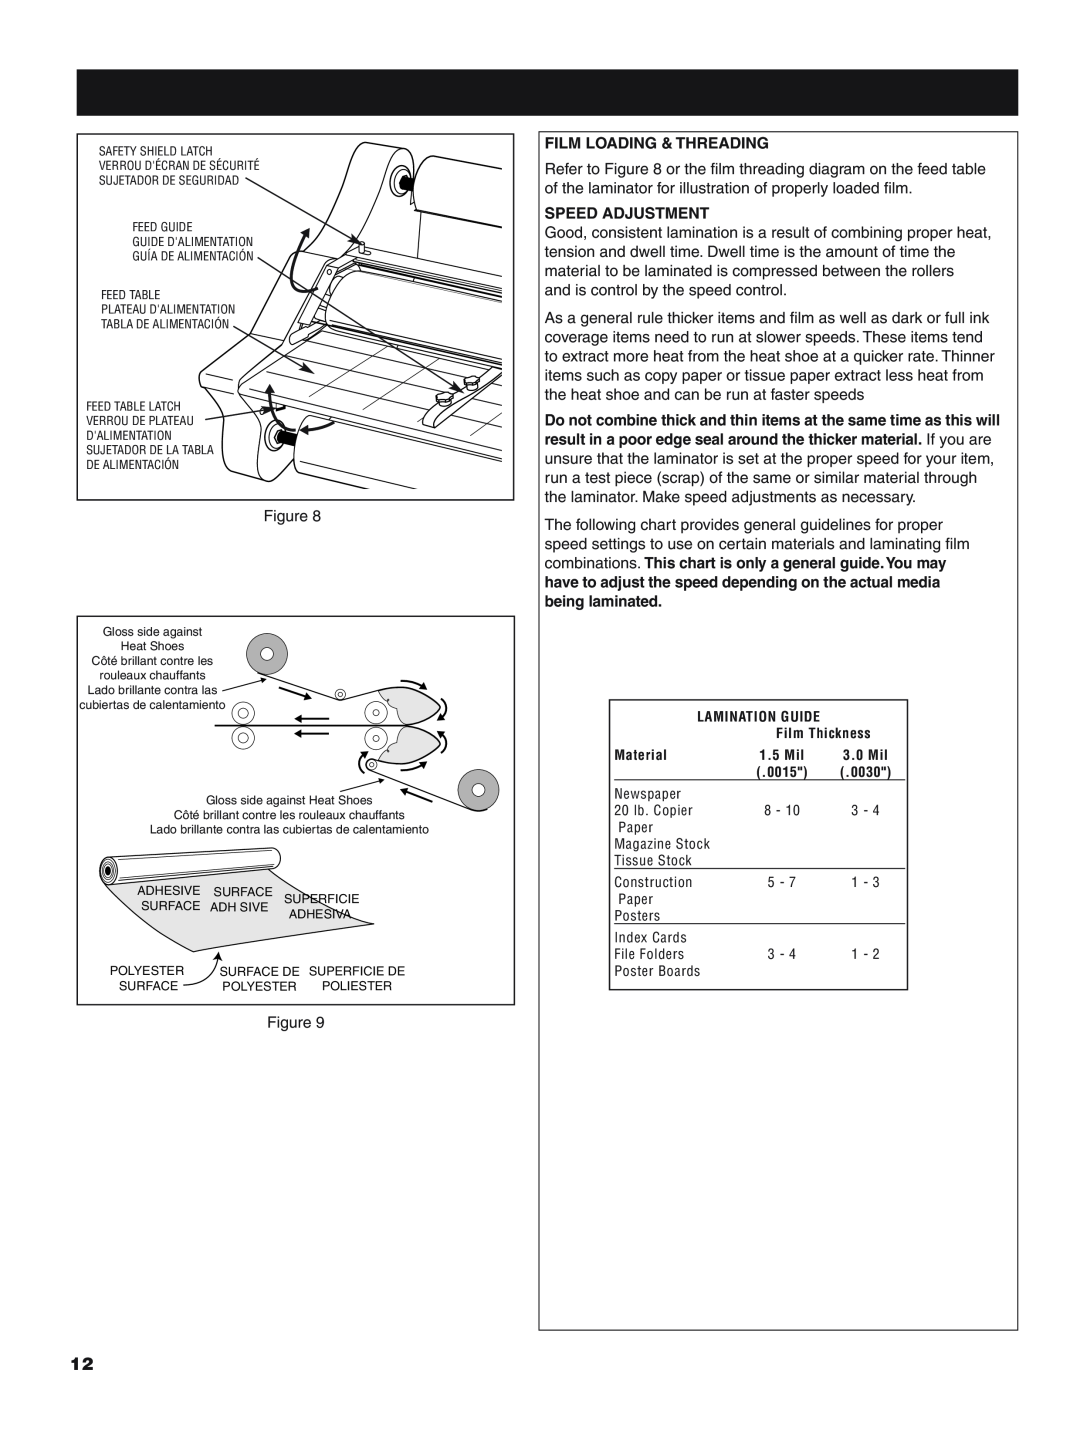 GBC H800 PRO-R manual Film Loading & Threading, Speed Adjustment 